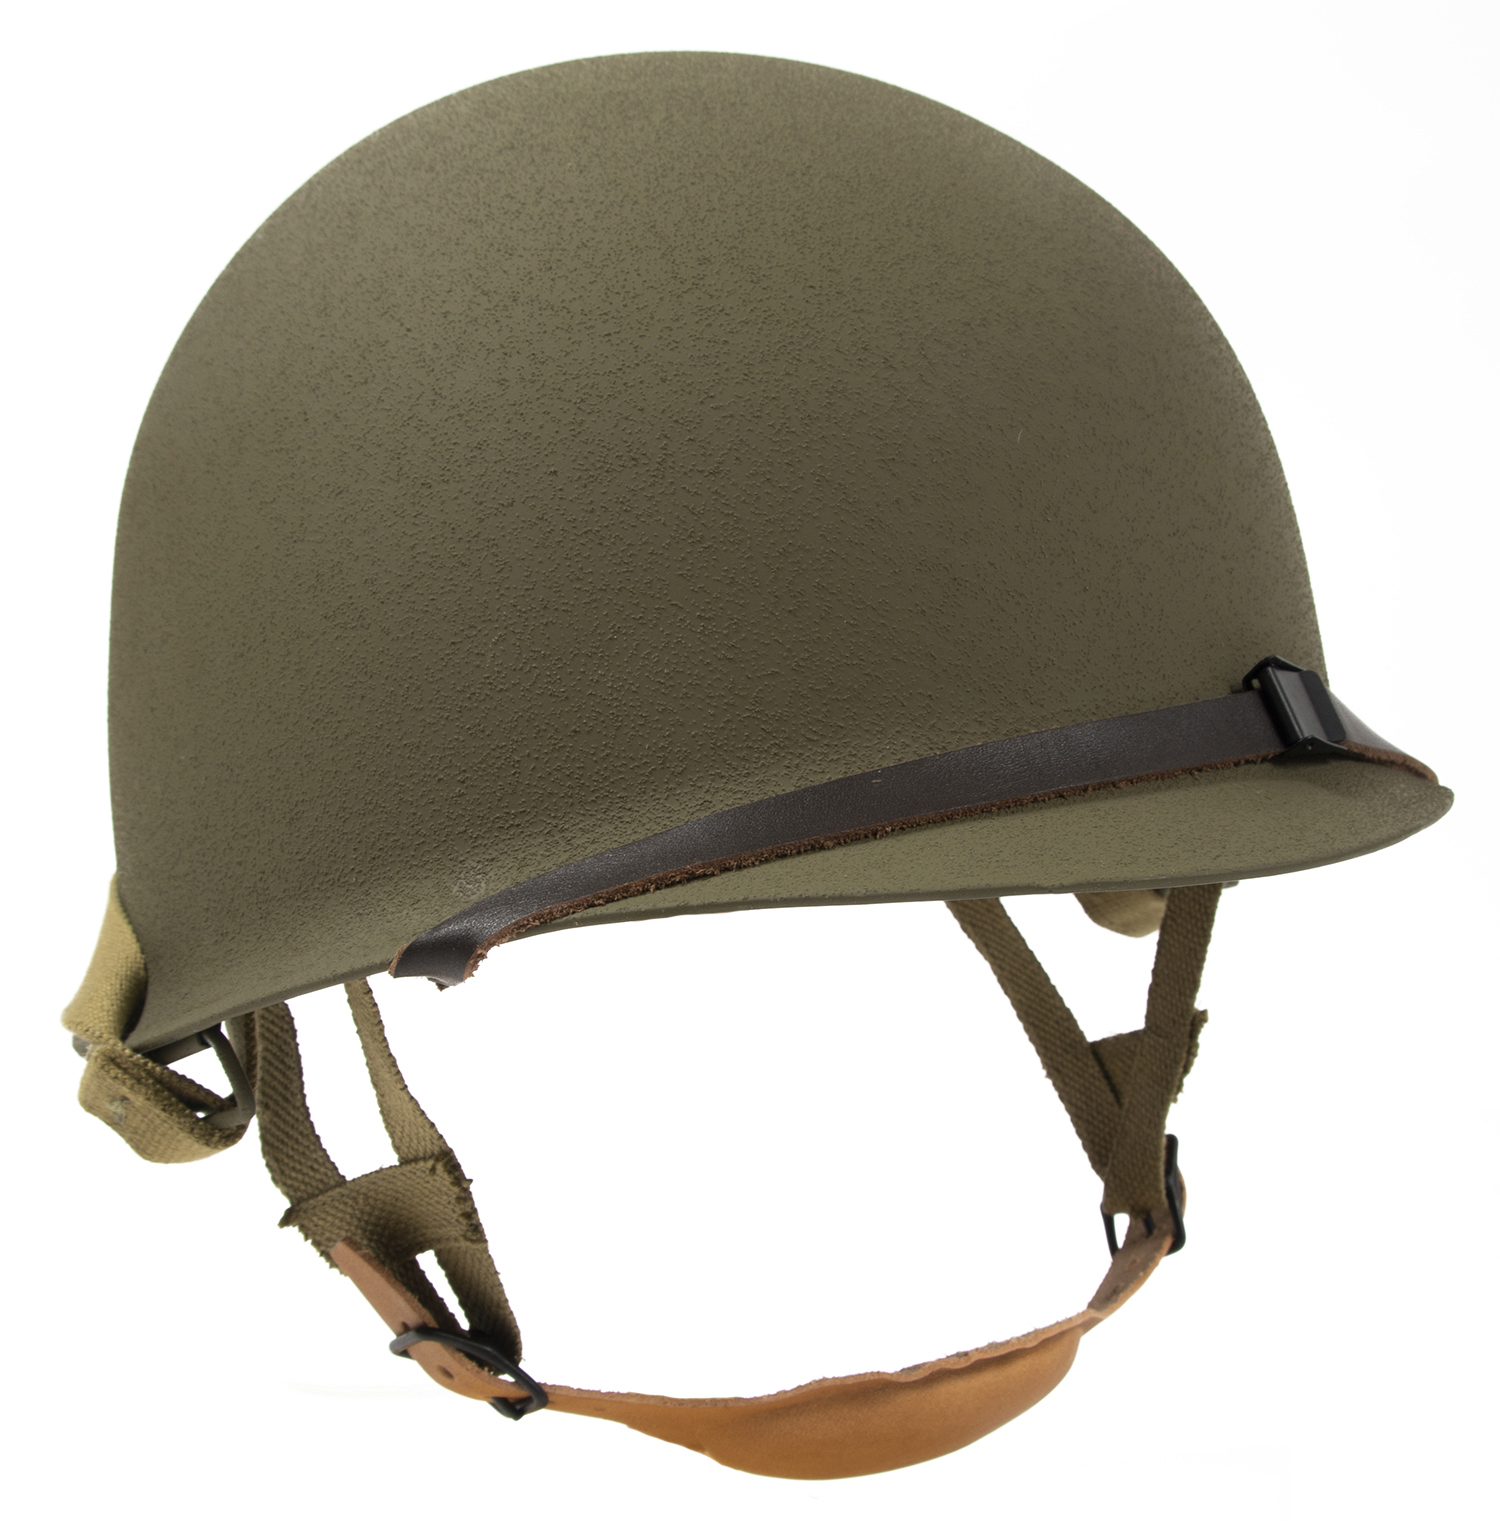 https://blog.atthefront.com/us_images/head/repro-paratrooper-helmet-main2.jpg